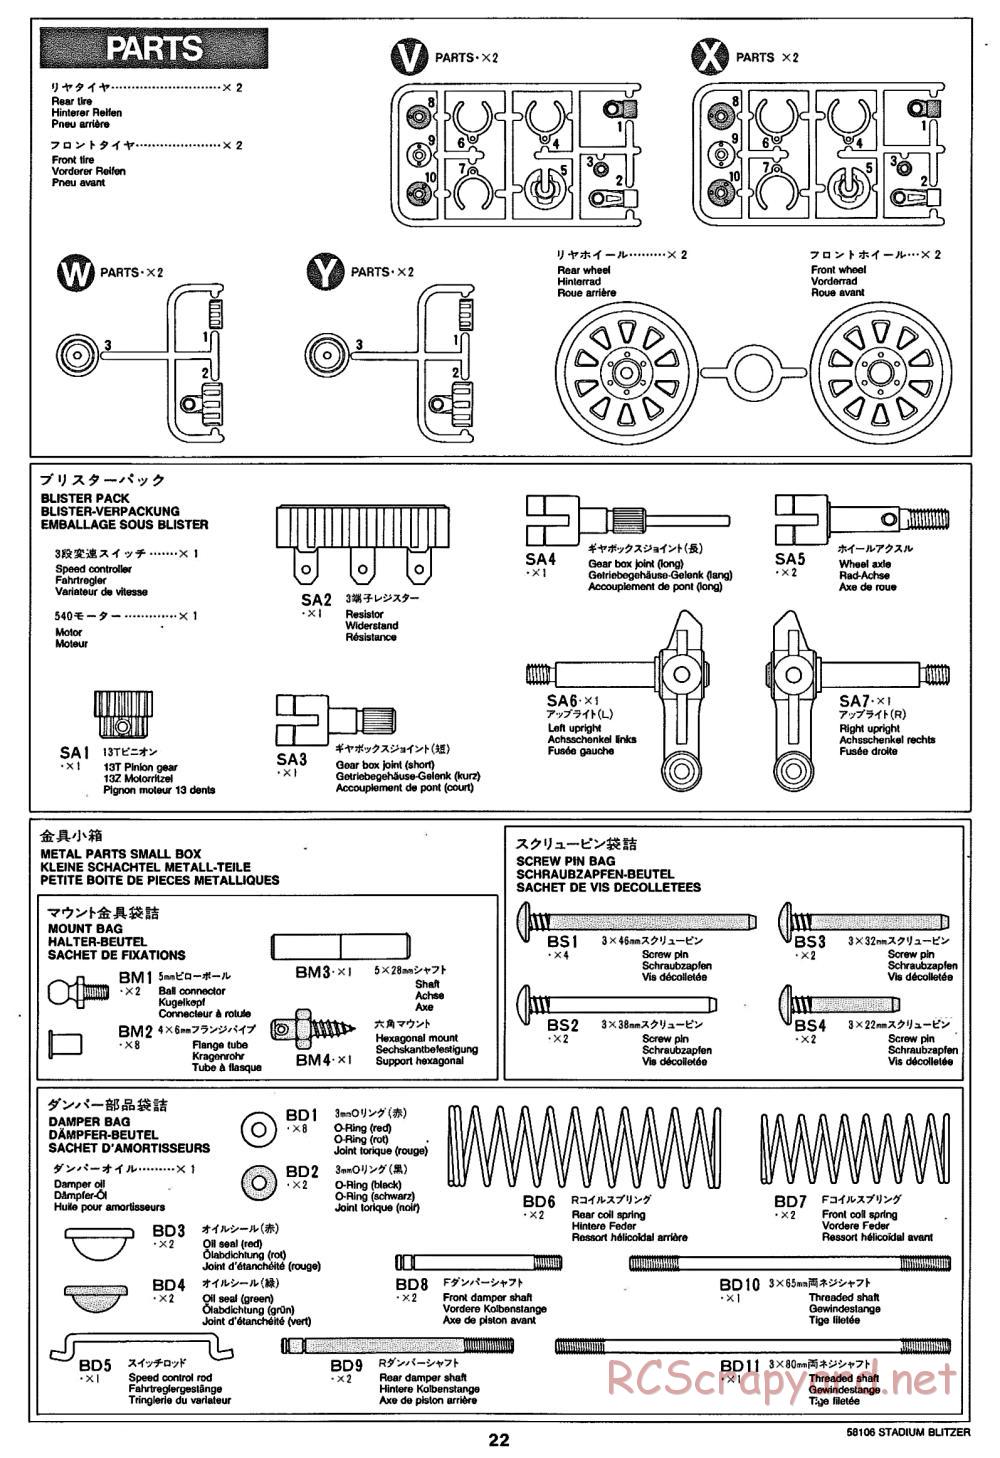 Tamiya - Stadium Blitzer Chassis - Manual - Page 22